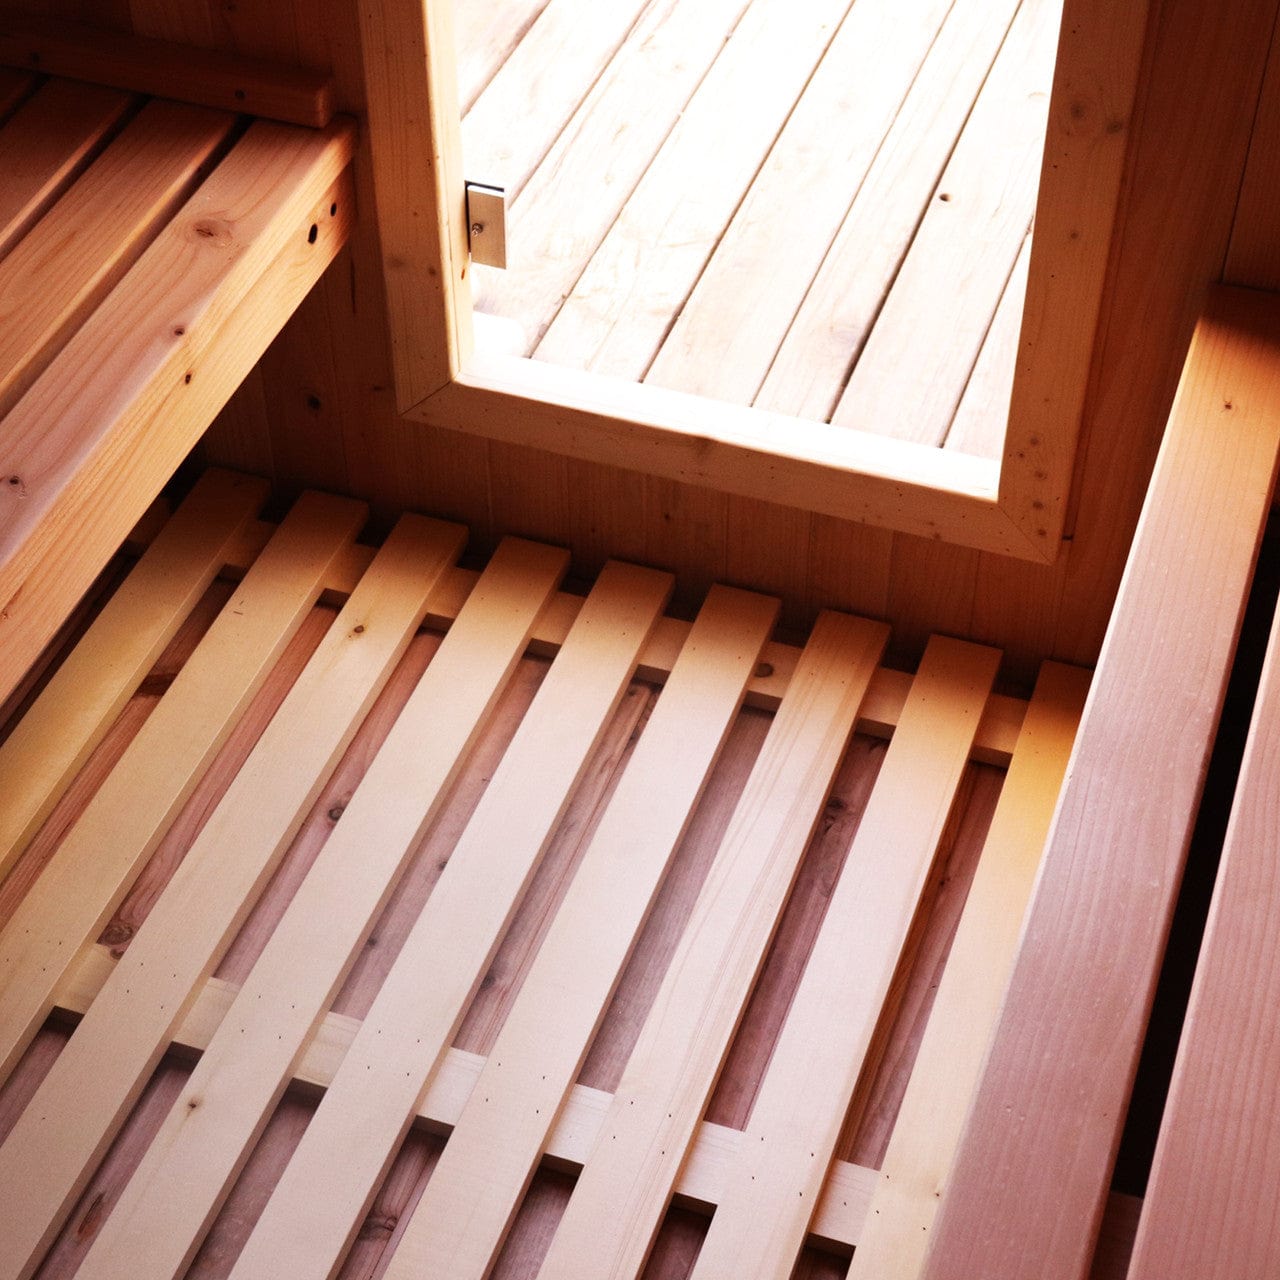 Aleko Hemlock Mobile Outdoor Sauna with Trailer – 8-10 Person Capacity